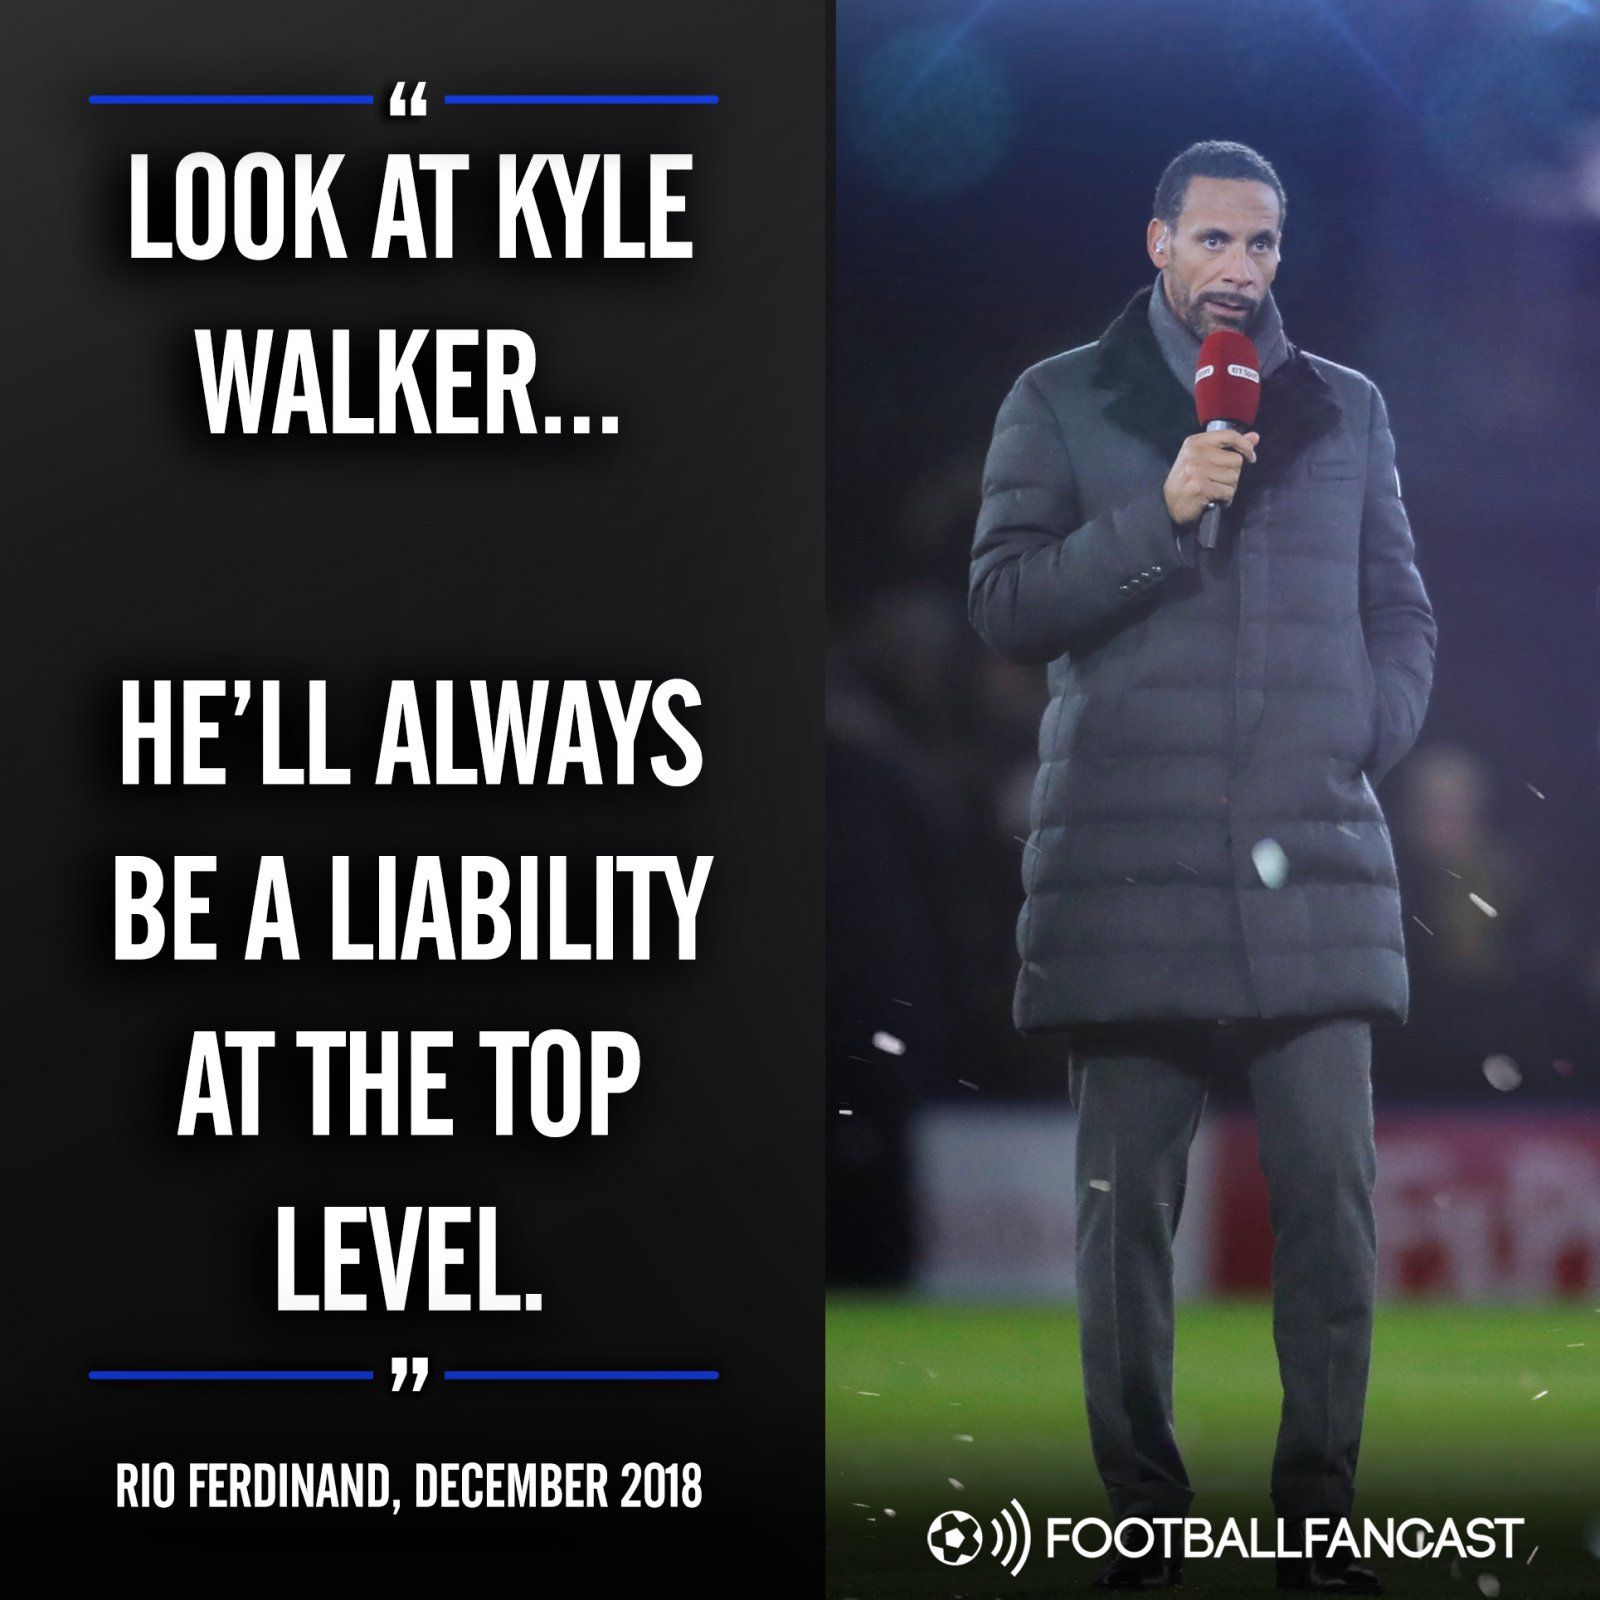 Rio Ferdinand's quote on Kyle Walker